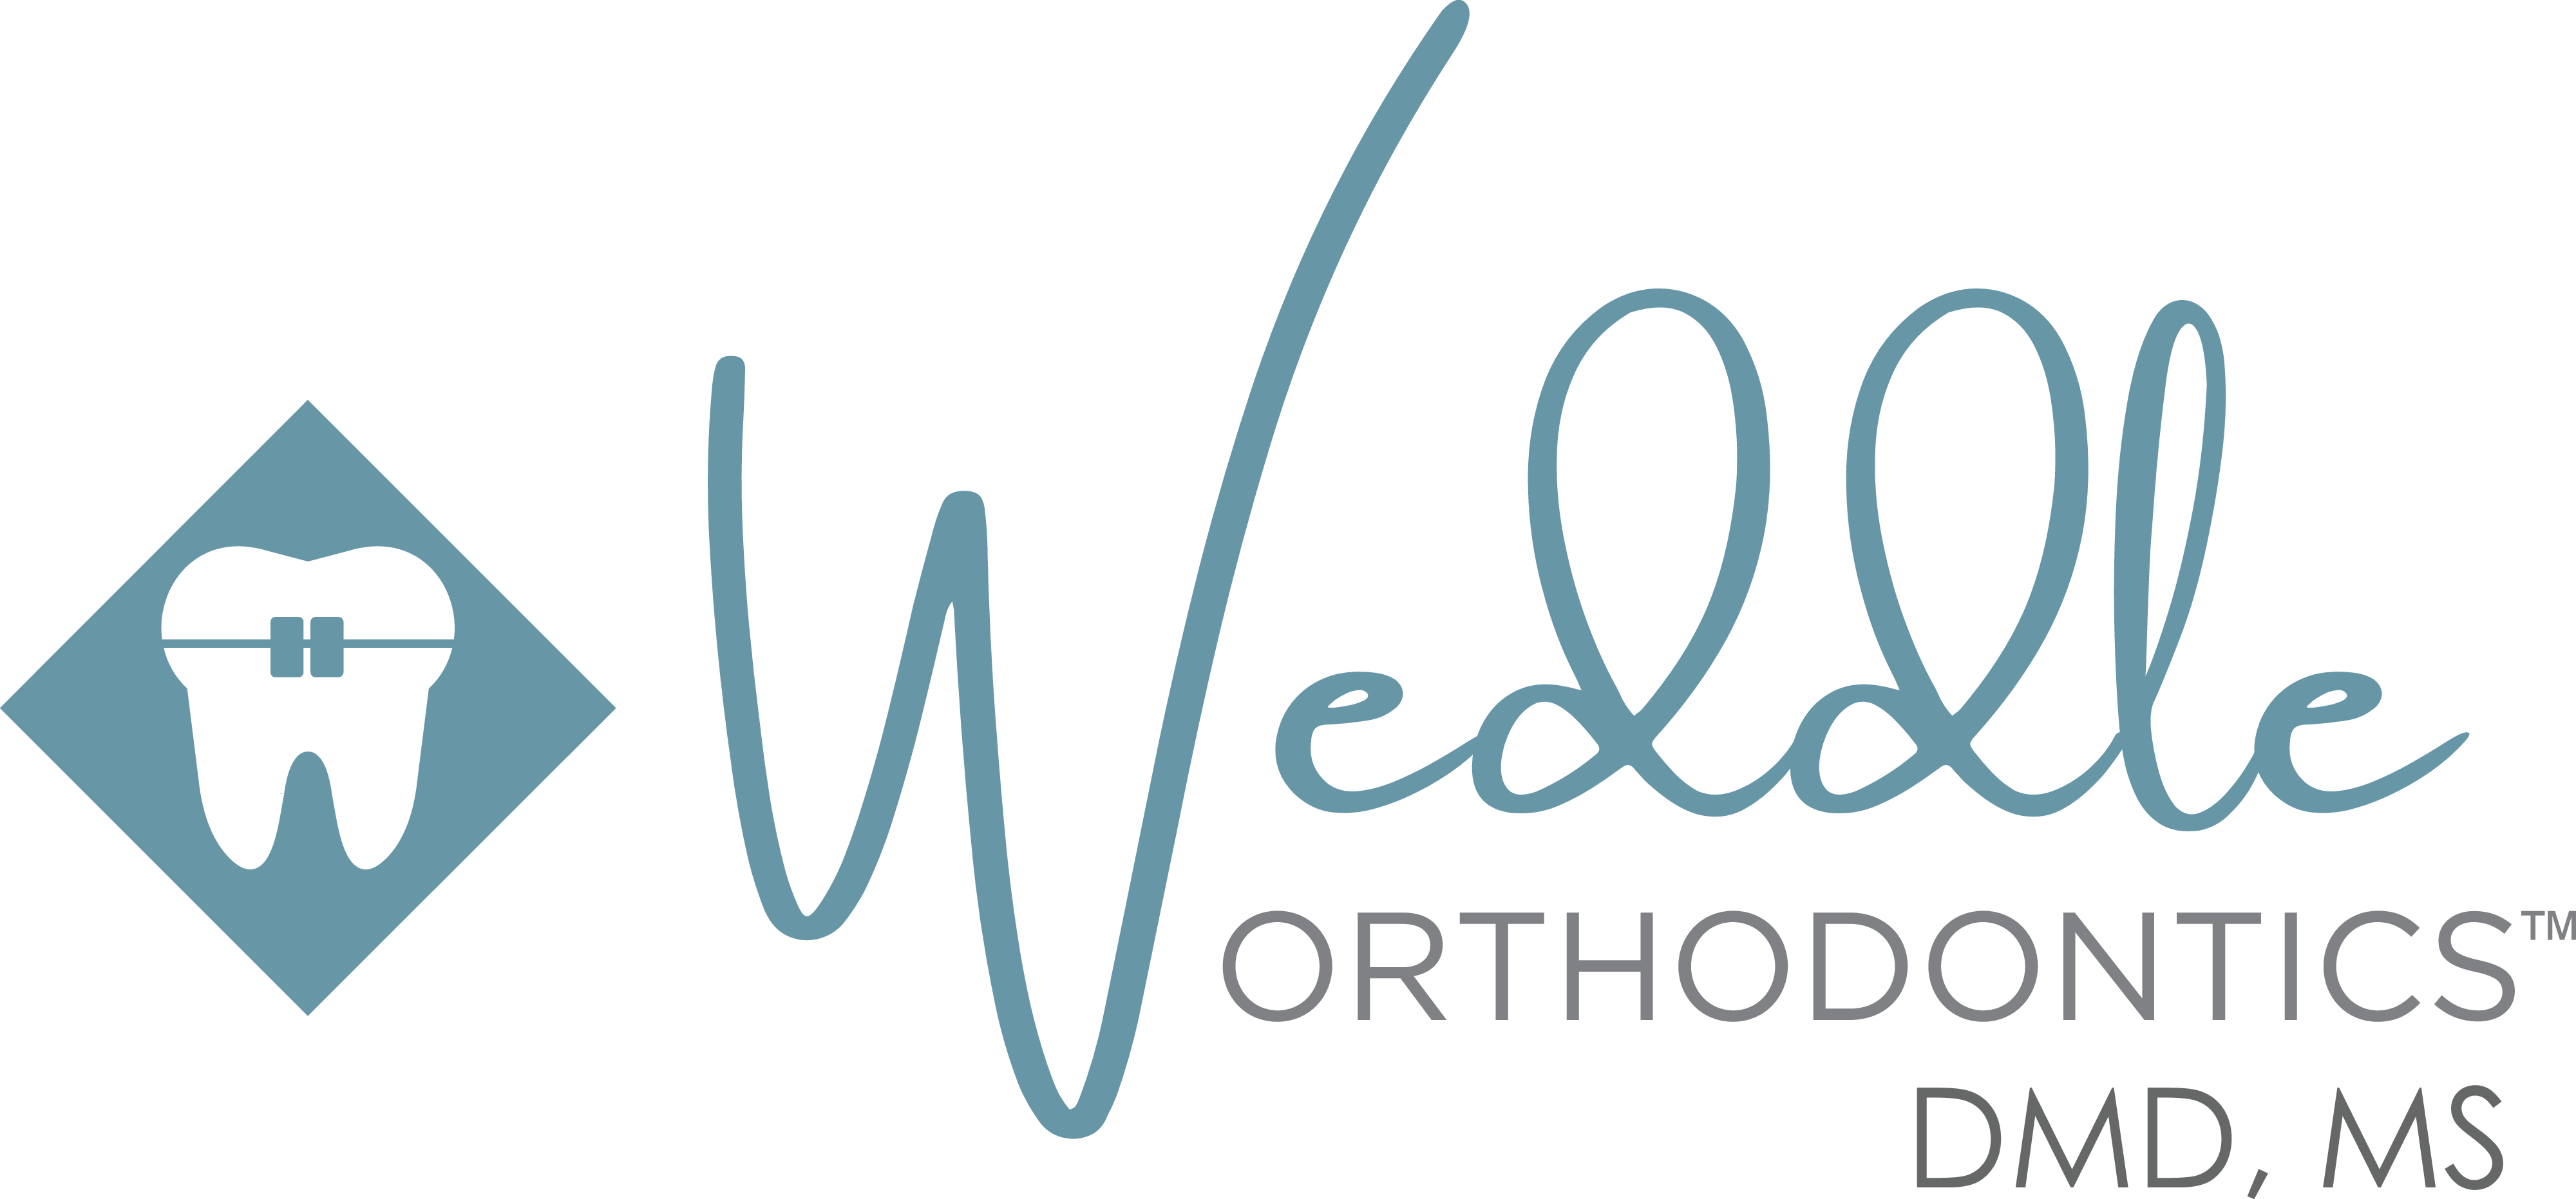 Weddle Orthodontics